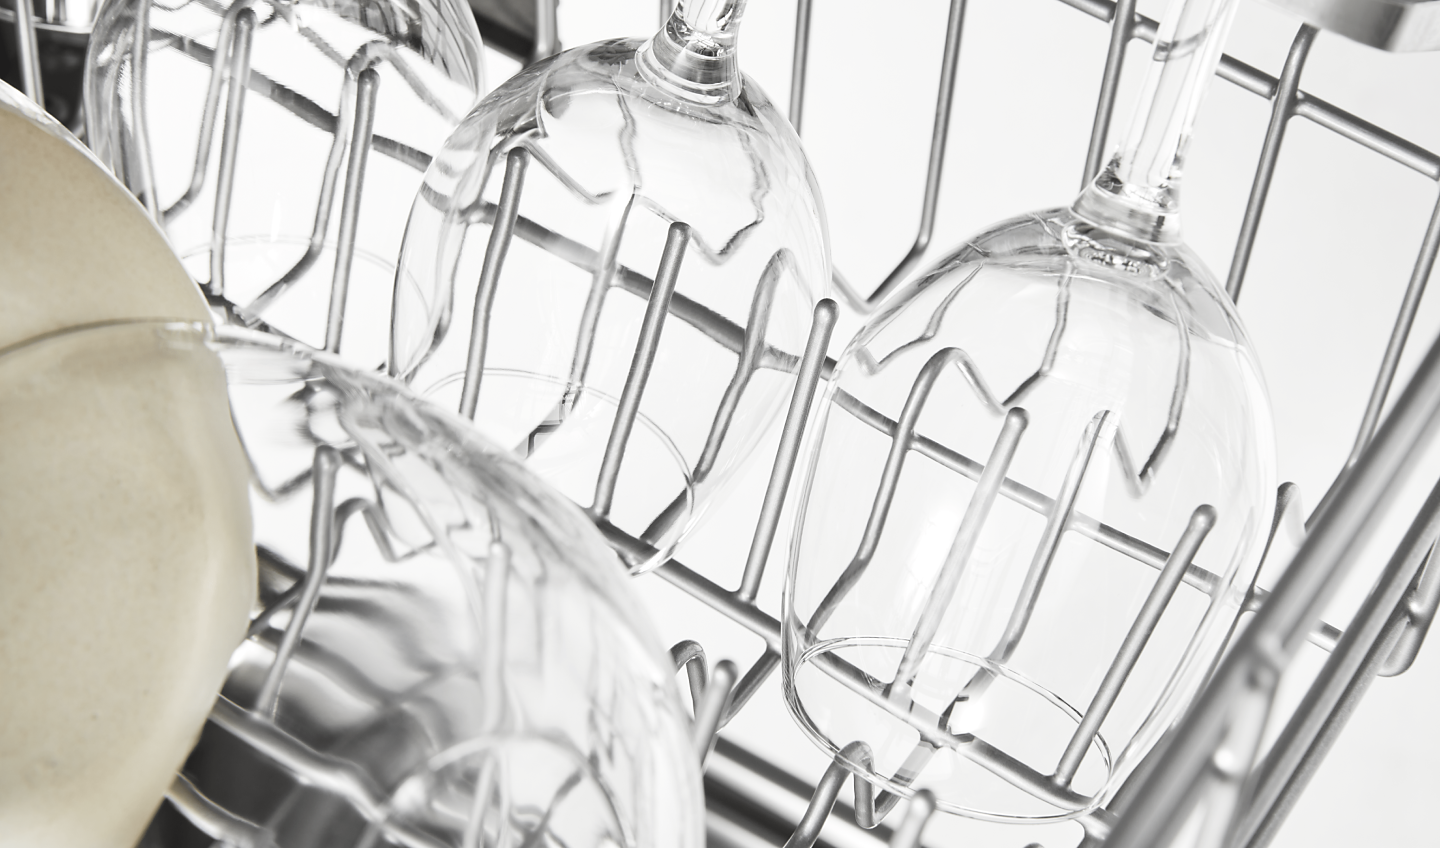 Wine glasses in a dishwasher rack